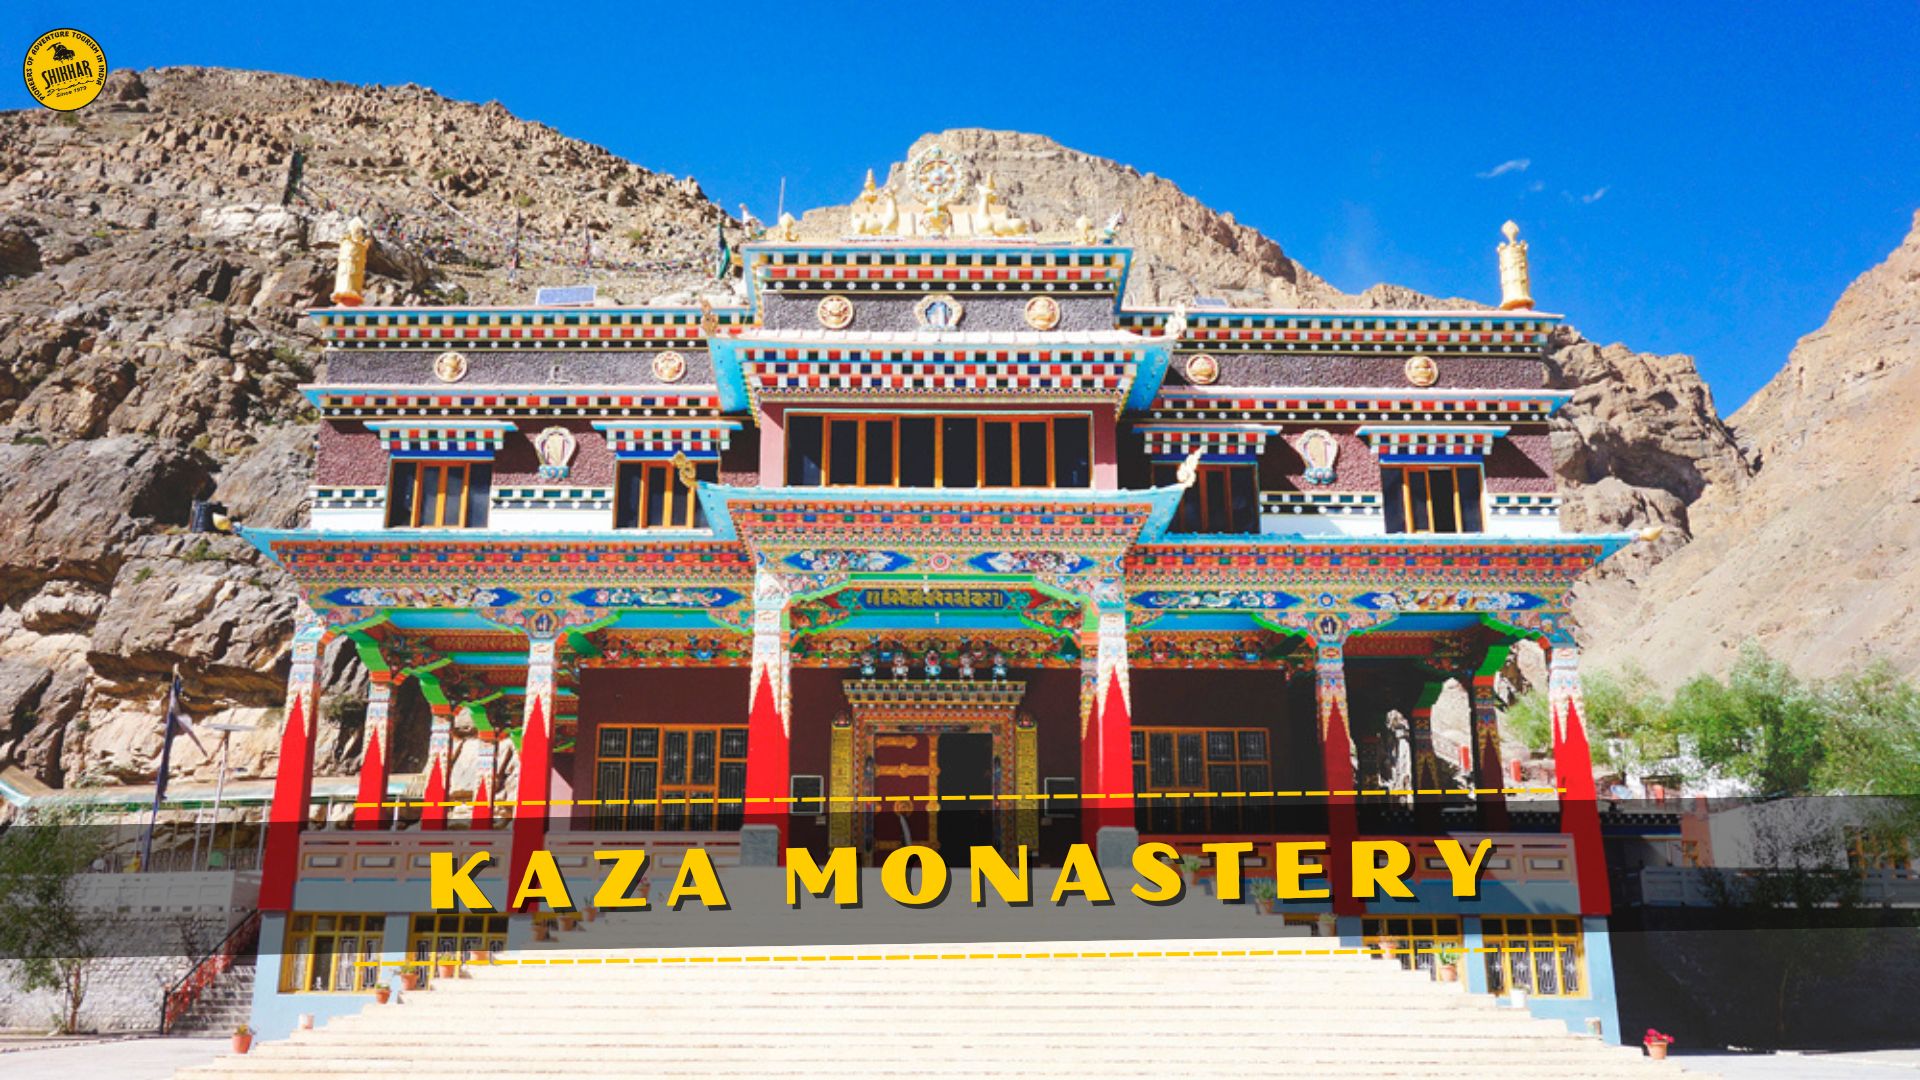 KAZA monastery